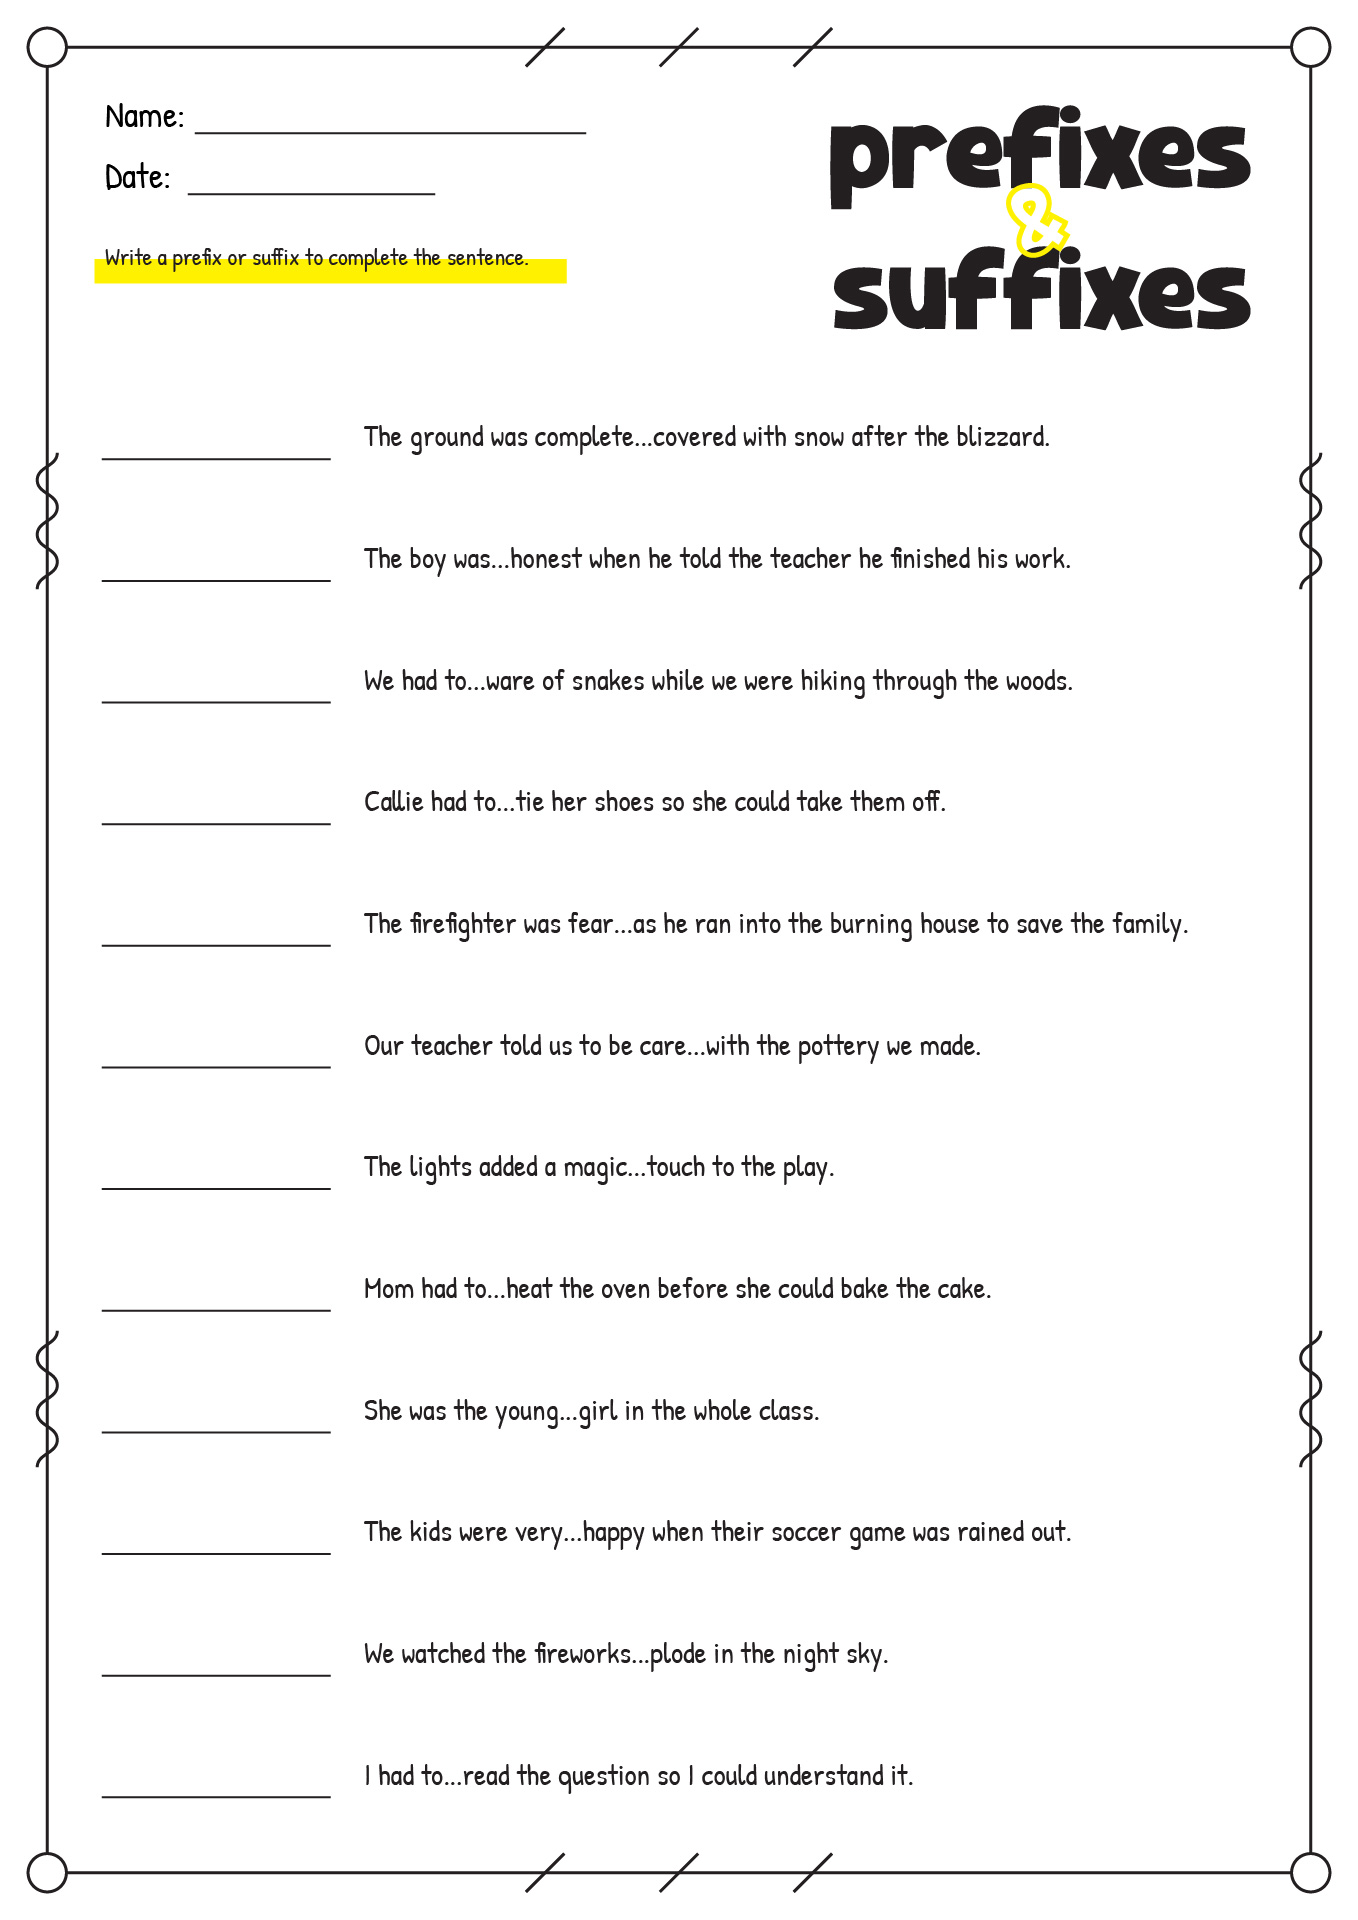 Prefixes and Suffixes Worksheets 4th Grade